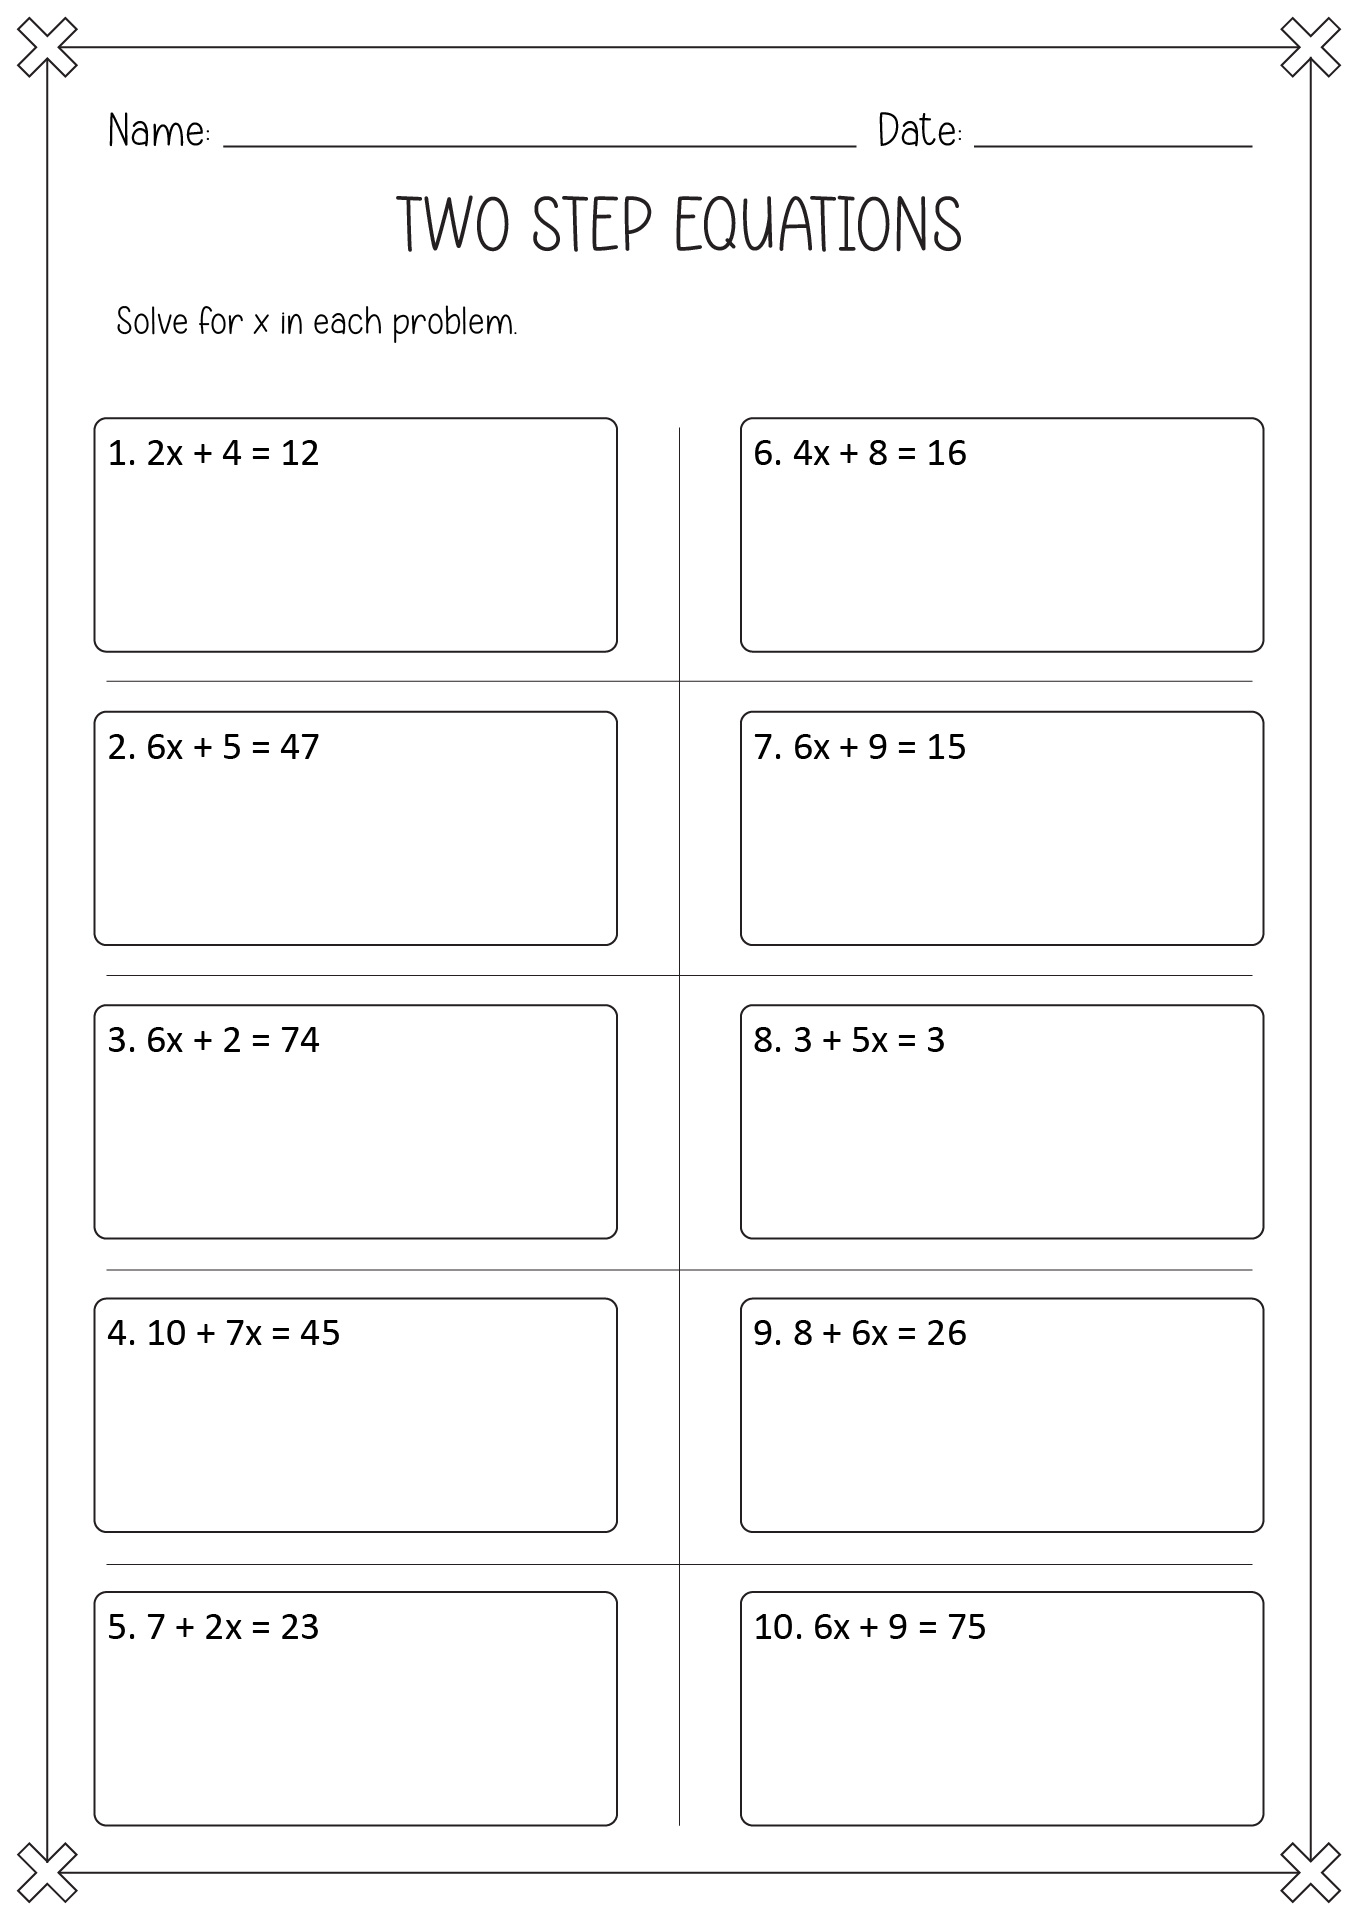 50 Printable 2 Step Equations Worksheets 30